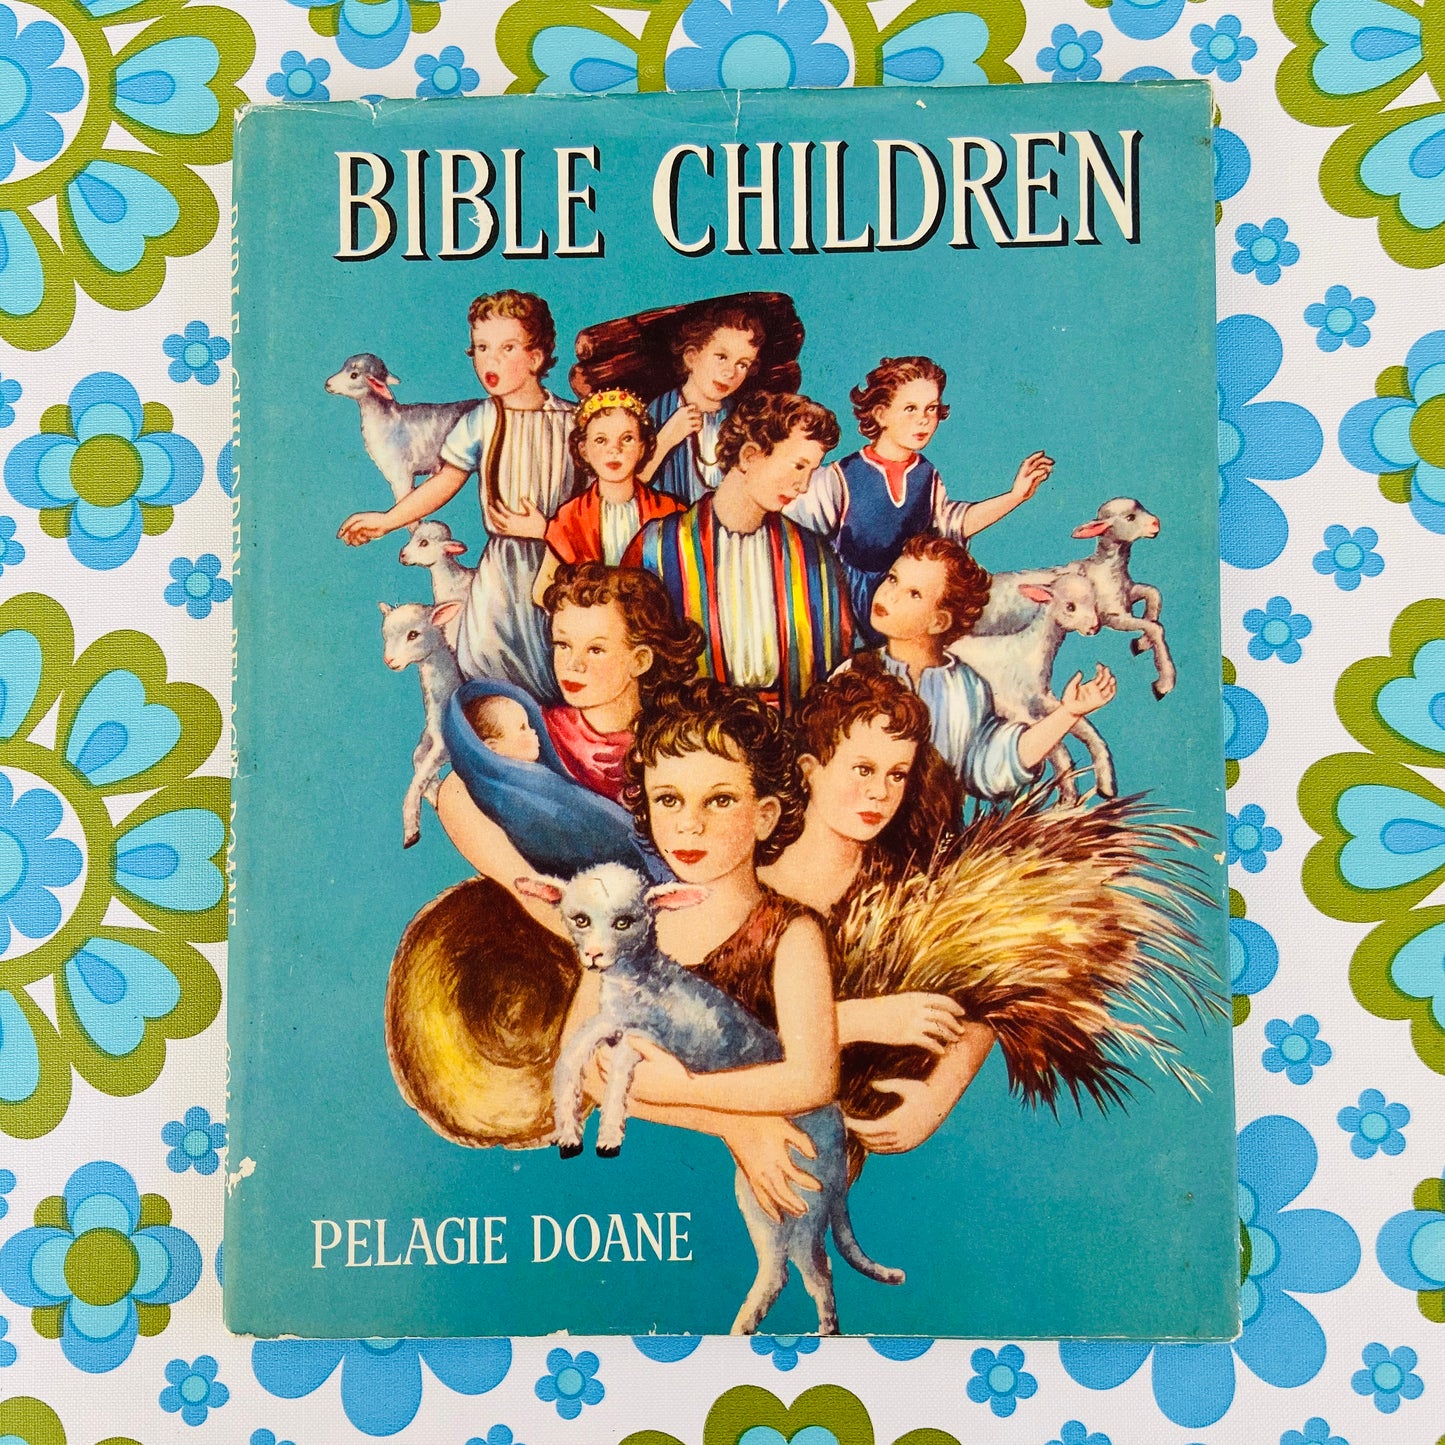 Bible Children - Pelagie Doane - Vintage Hard Cover